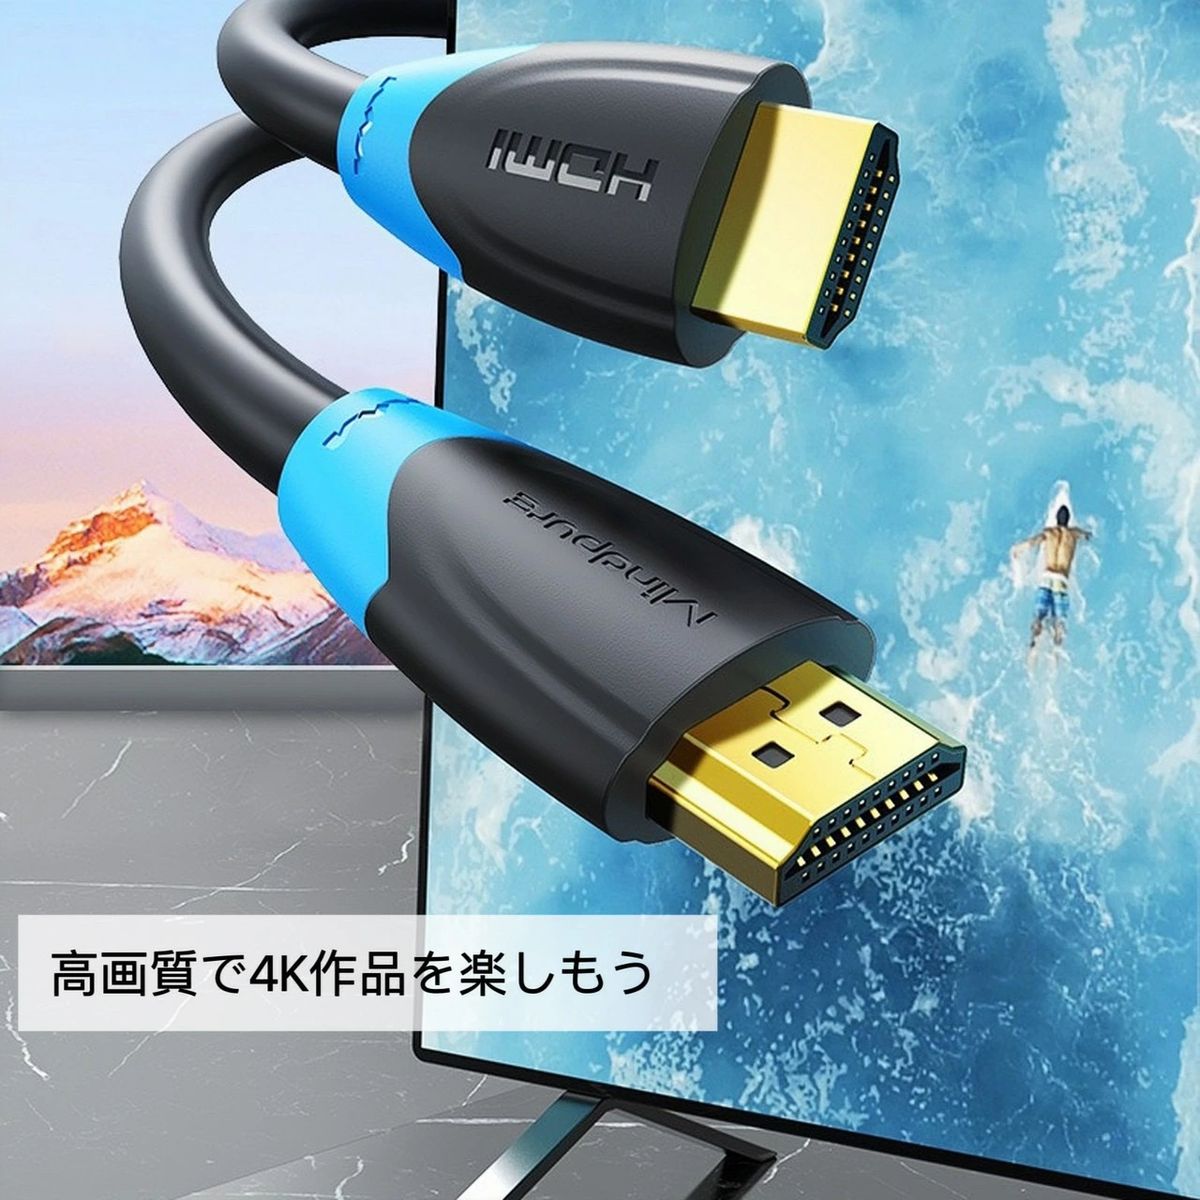 HDMIケーブル 4K 3m 2.0規格 ハイスピード HDMI ケーブル AVケーブル 業務用 Xbox PS3 PS4